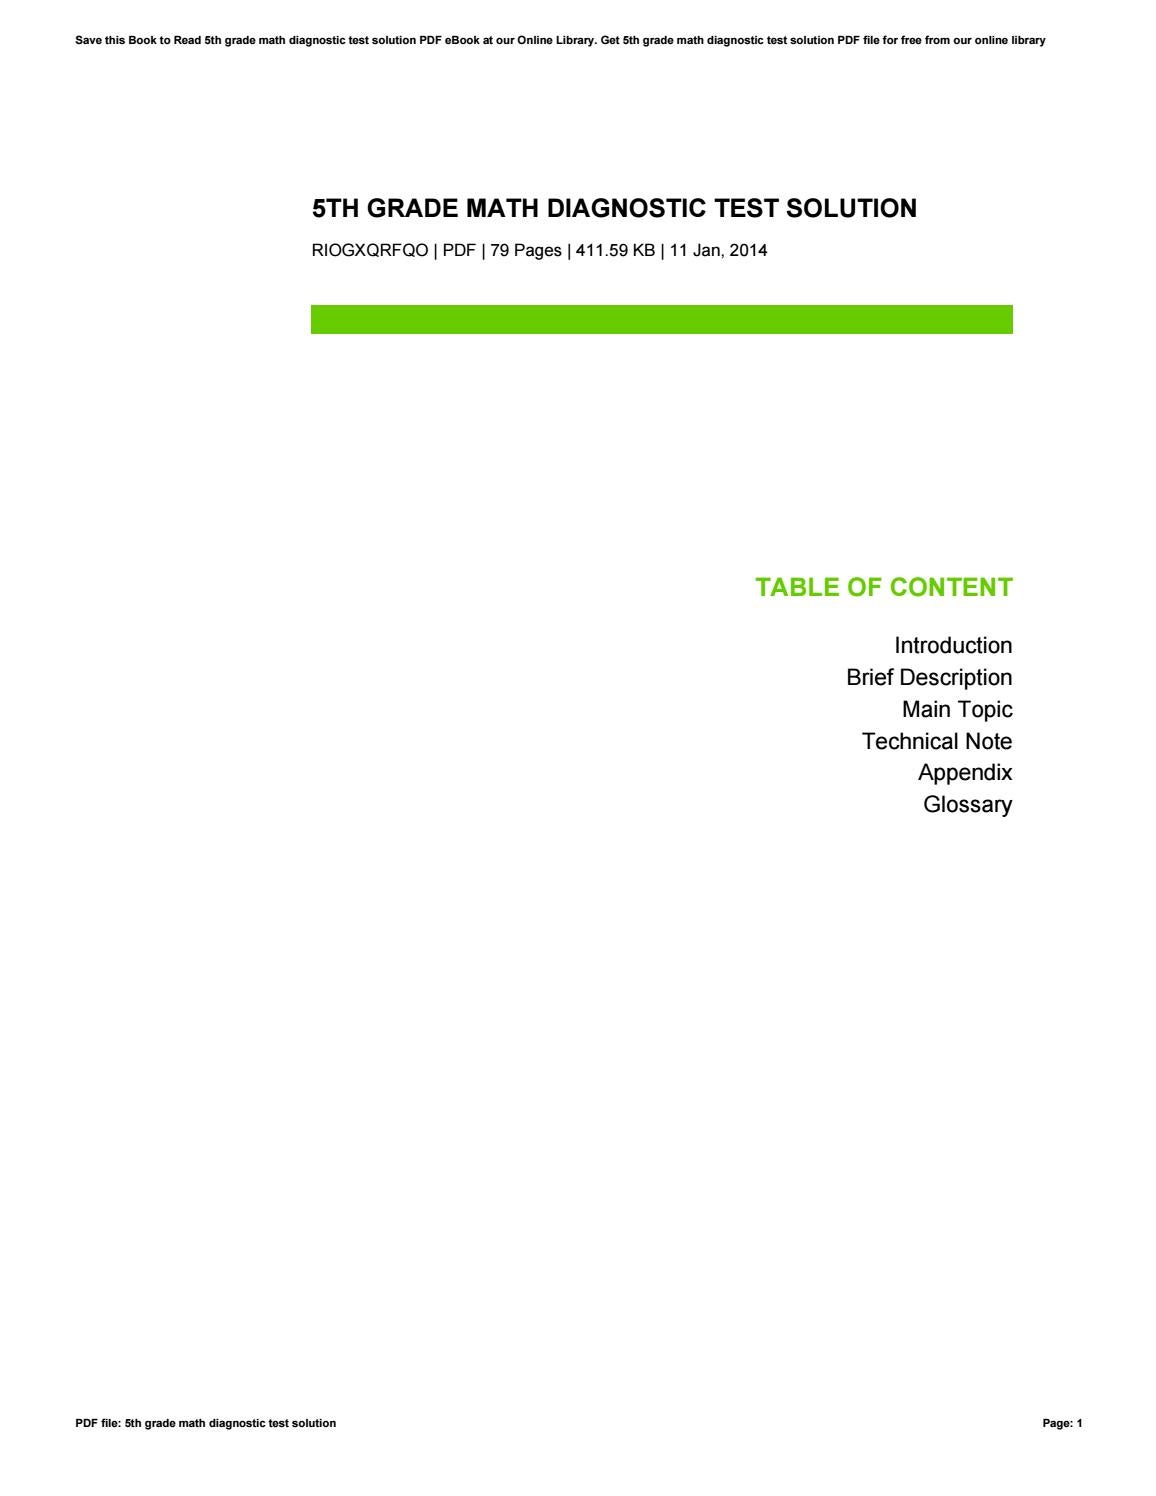 maths quest 11 solutions manual pdf